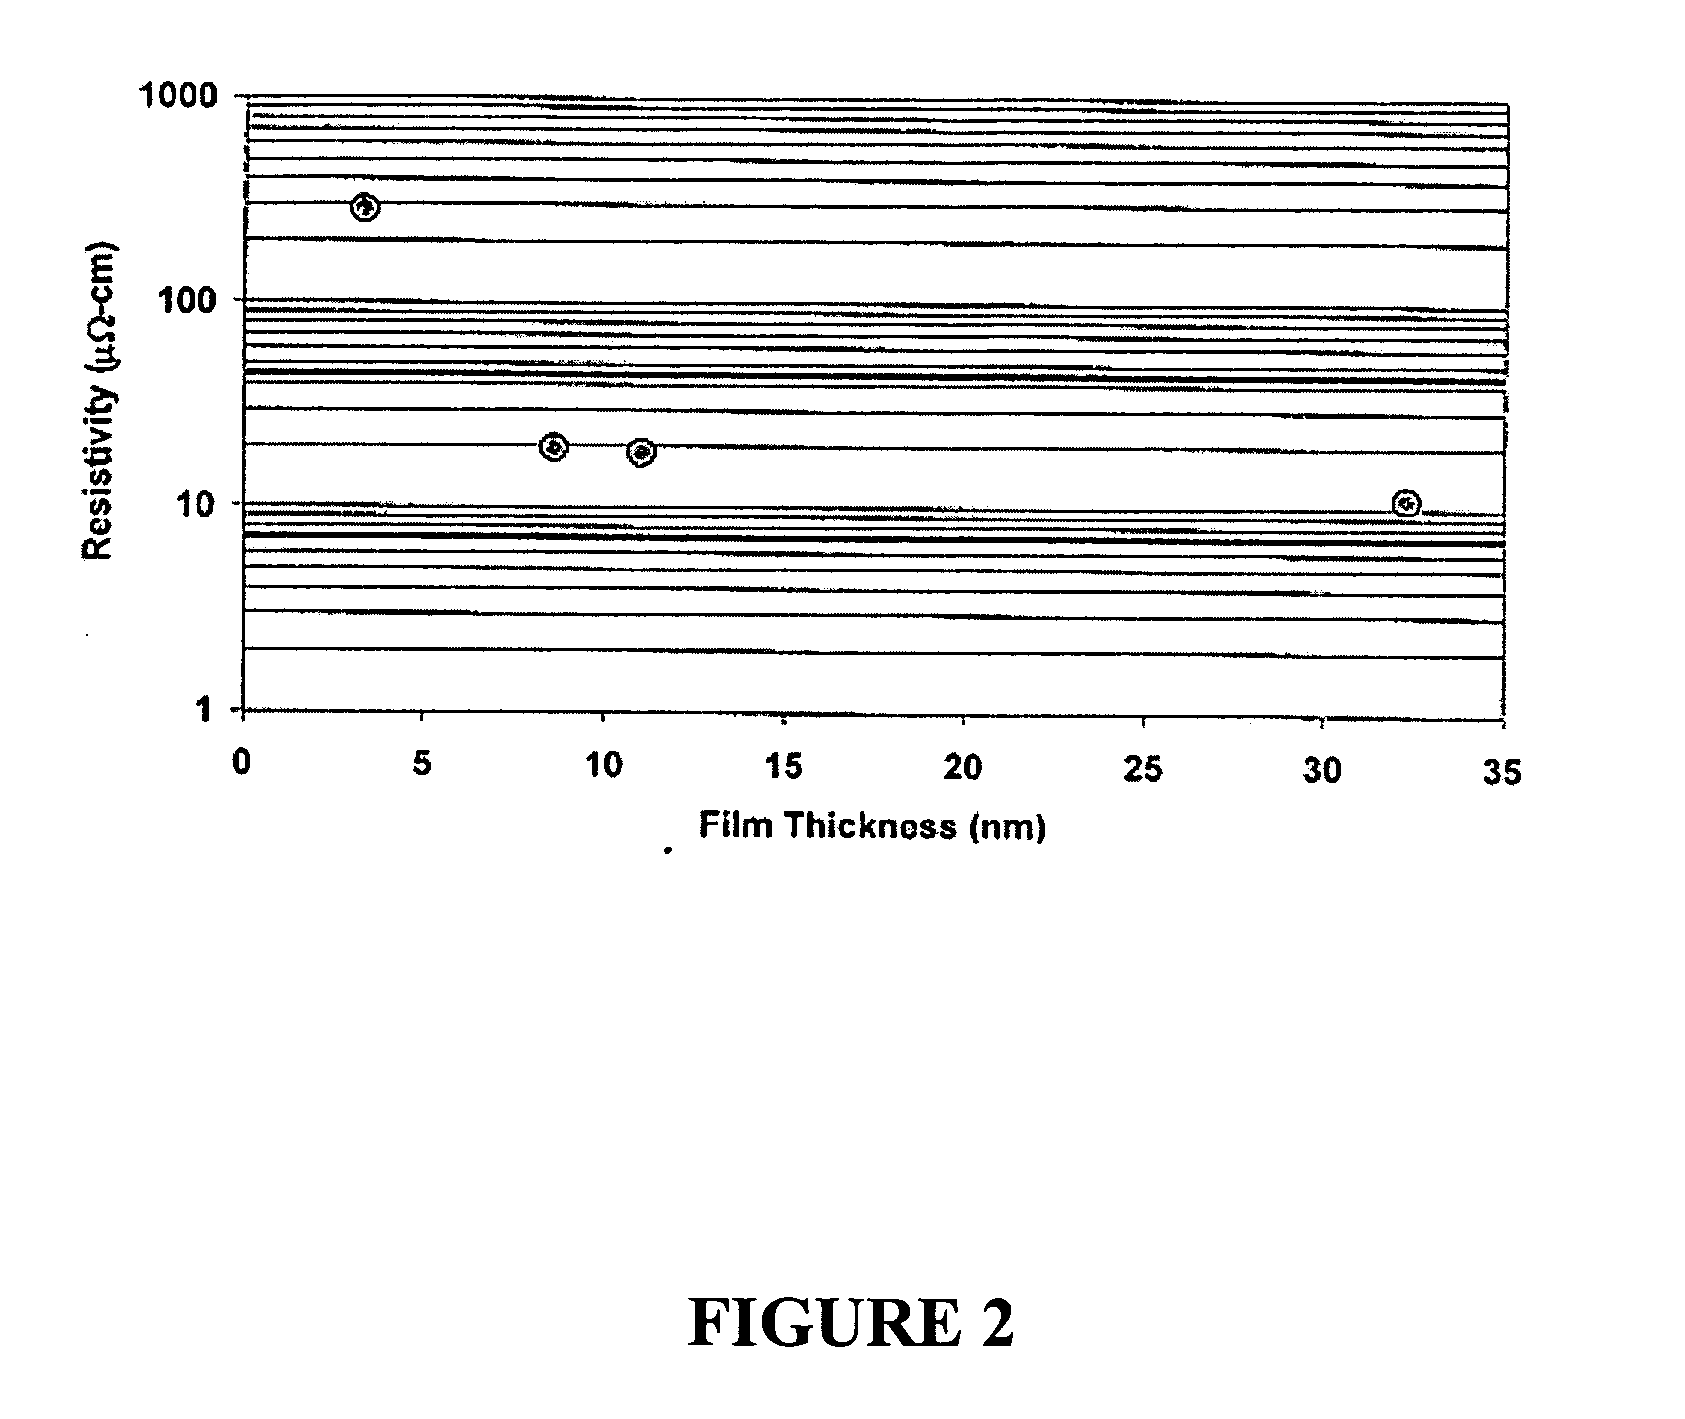 Chemical vapor deposition of high conductivity, adherent thin films of ruthenium